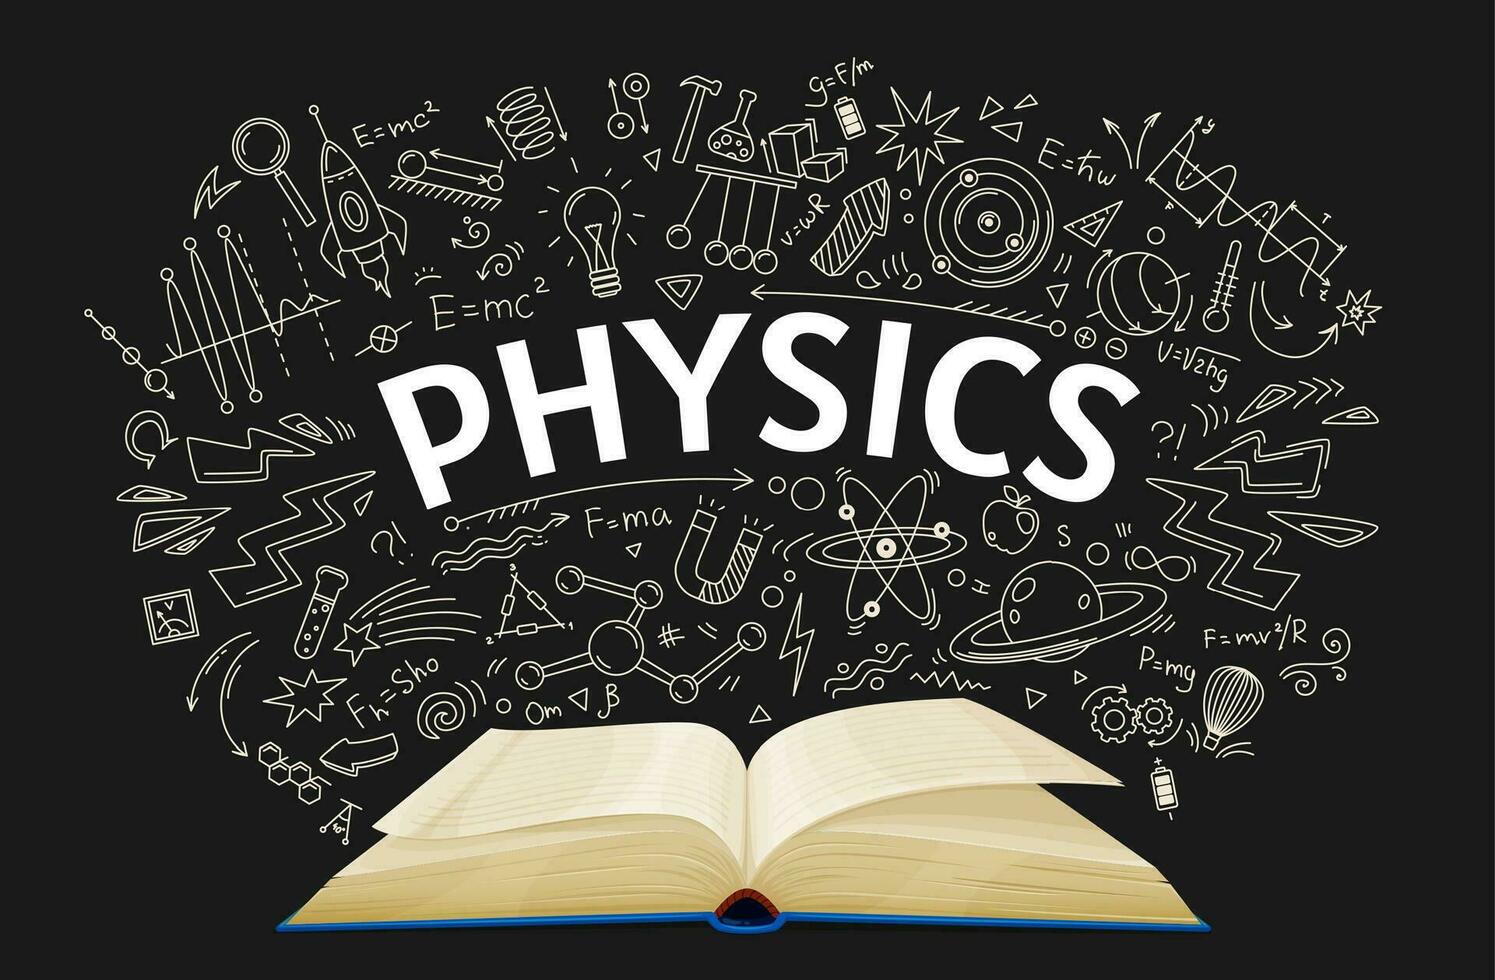 Physics textbook on school chalkboard background vector